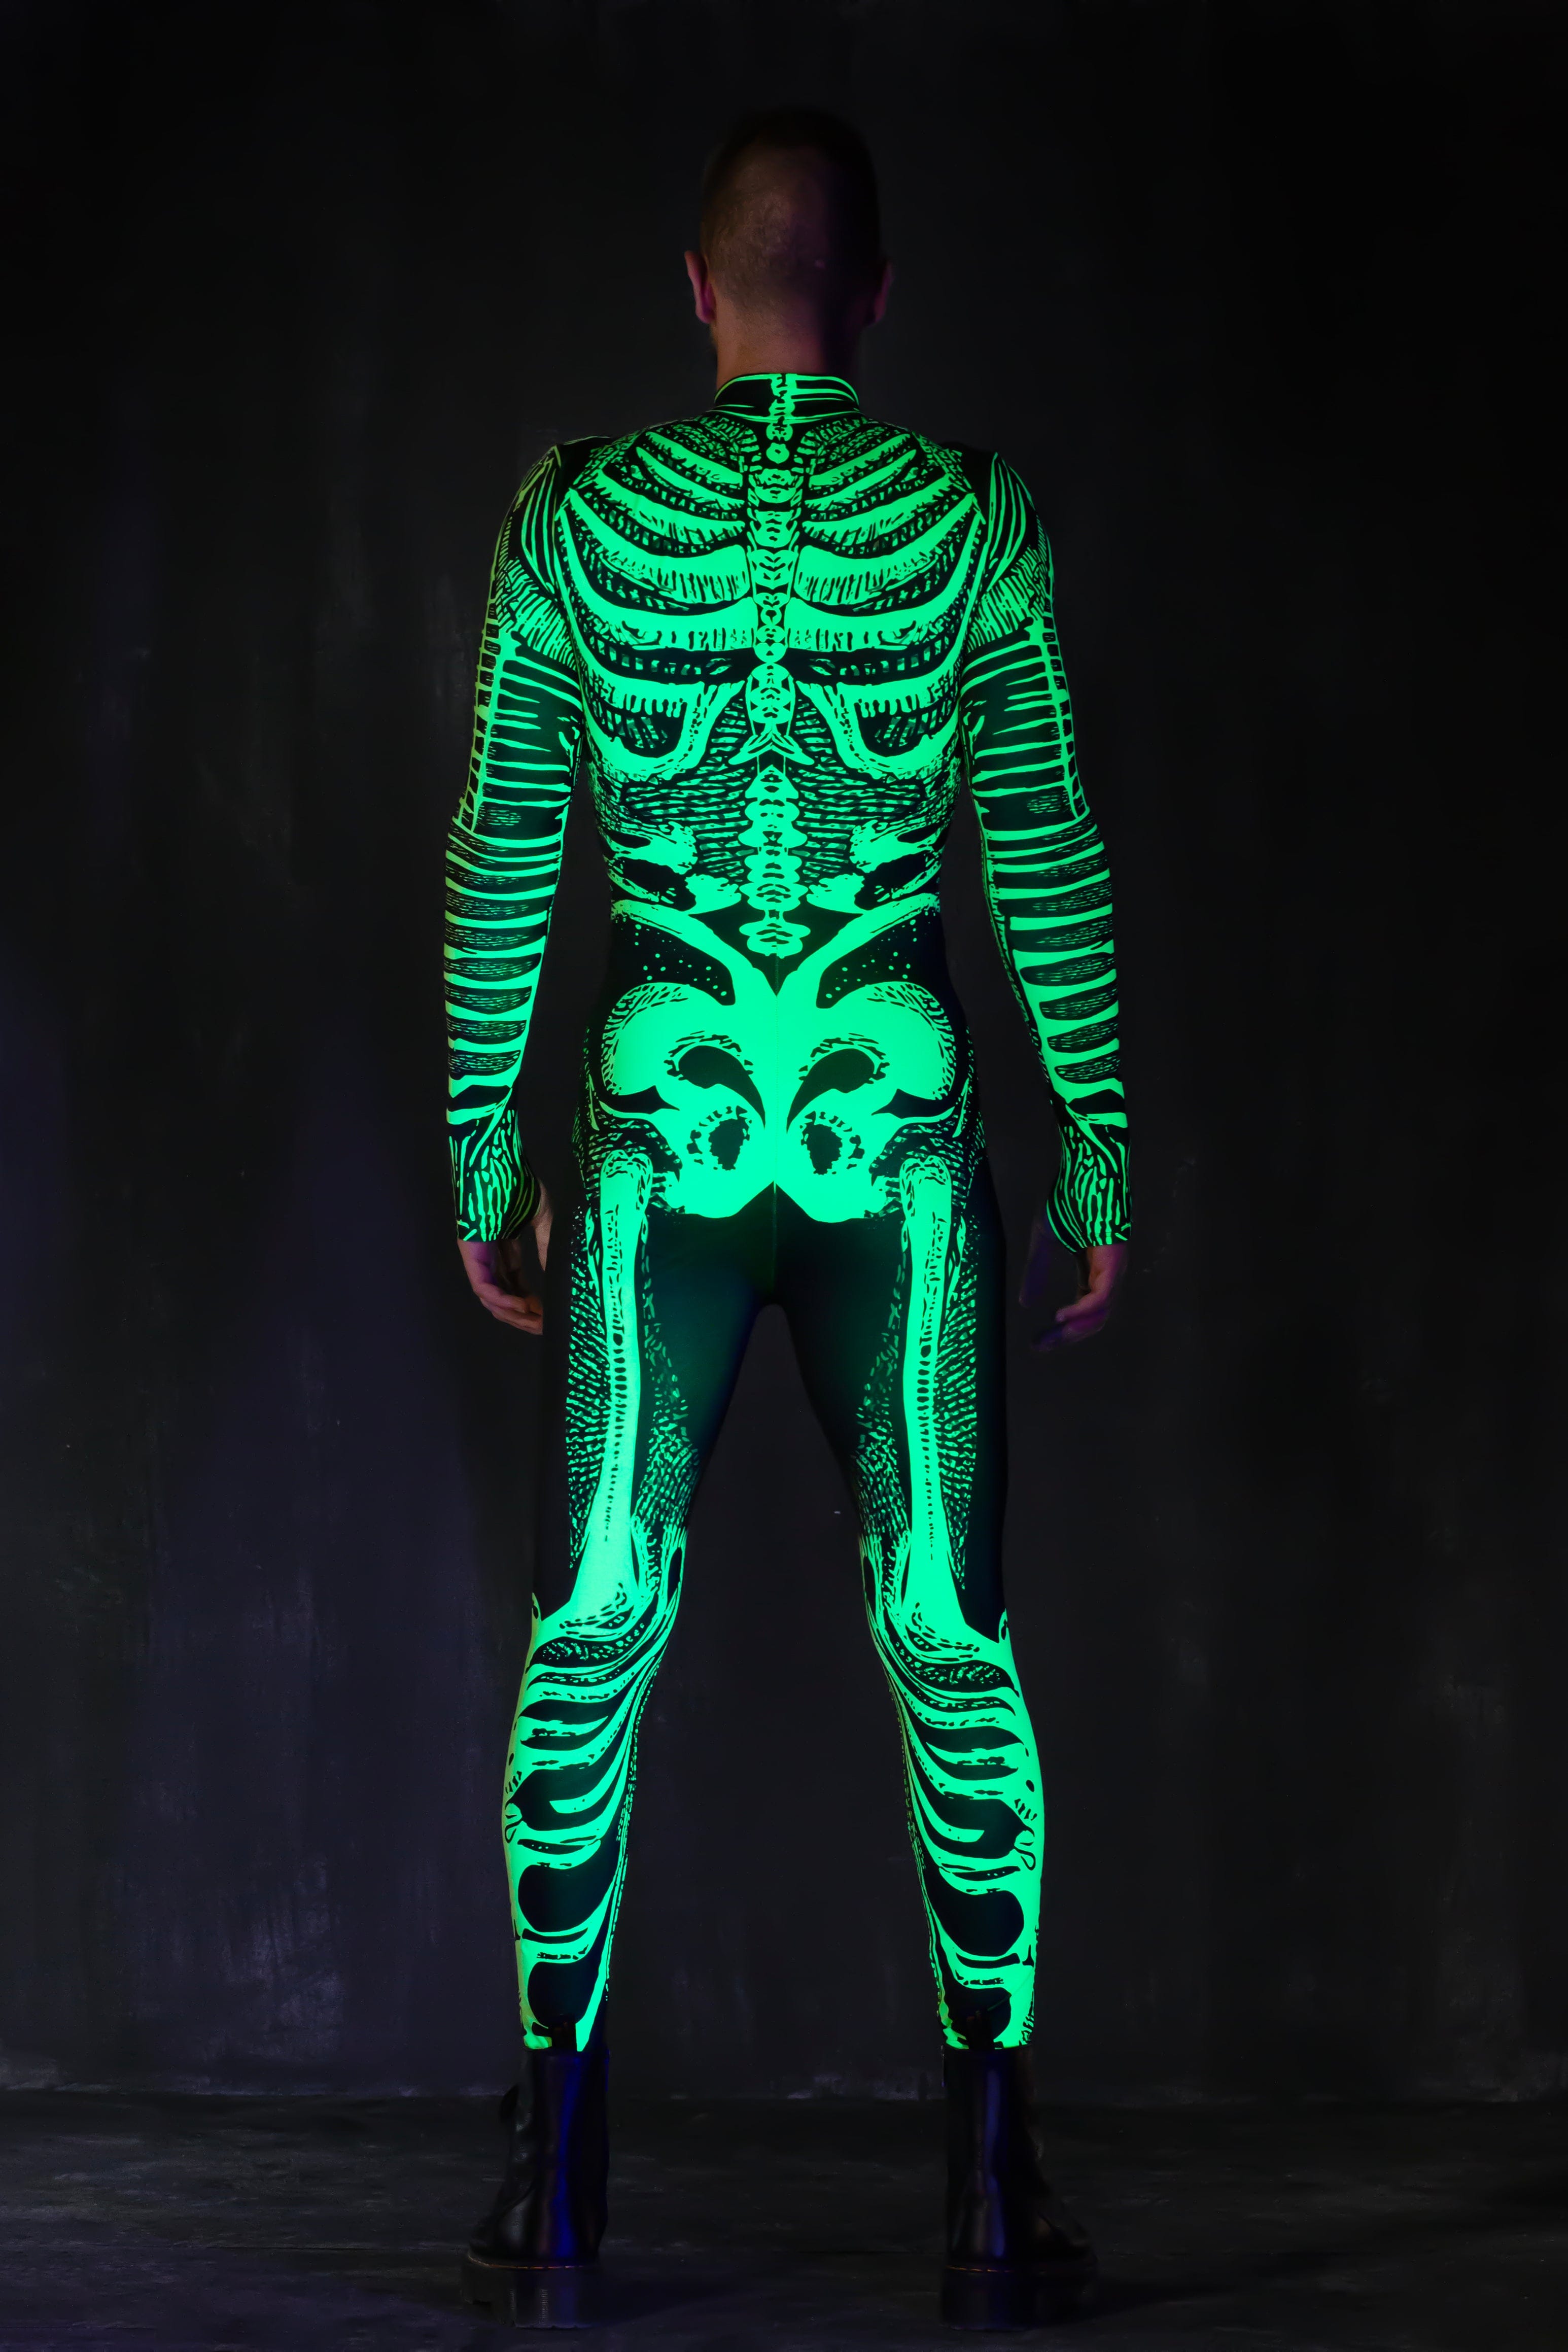 Inhuman Green Male Costume - BADINKA